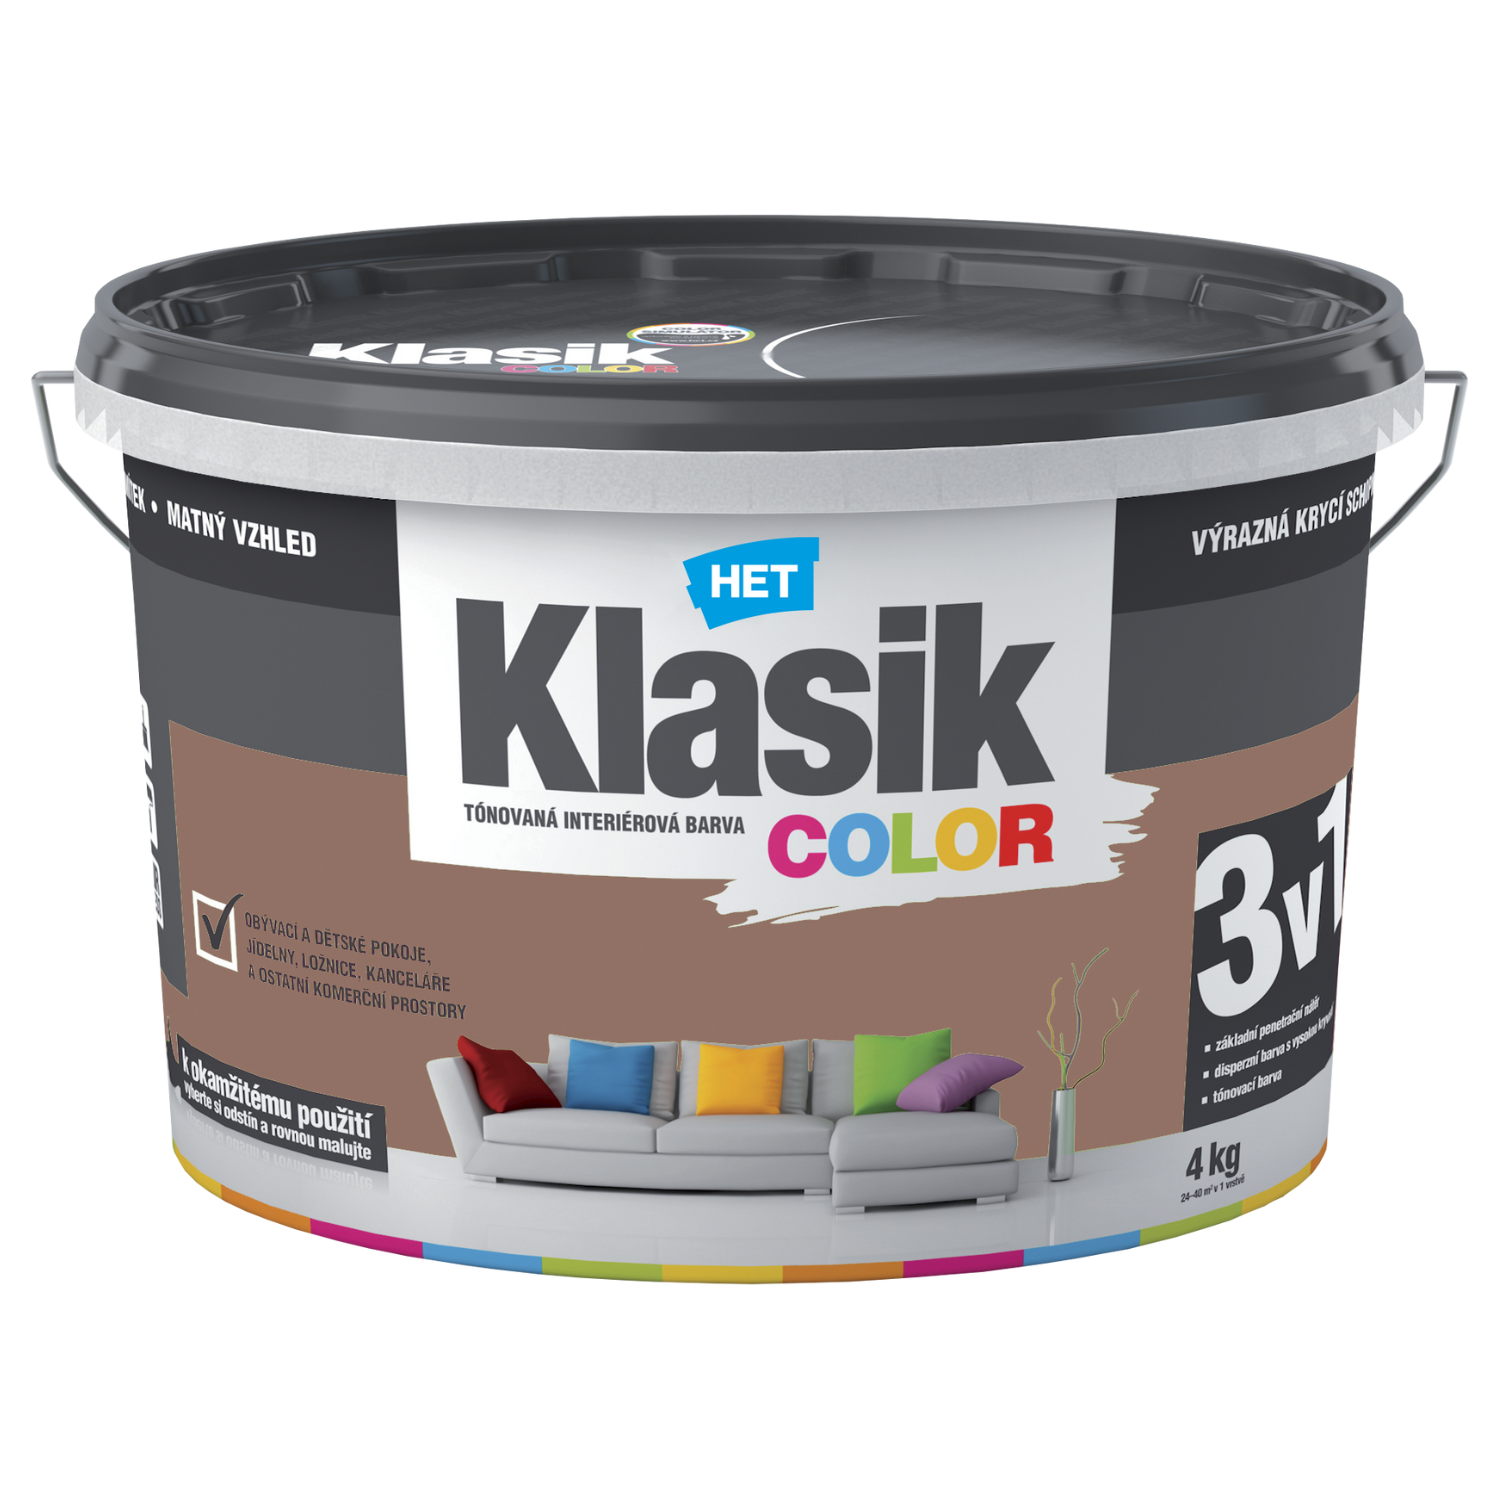 HET Klasik COLOR tónovaná interiérová akrylátová disperzná oteruvzdorná farba 4 kg, KC0267 - hnedý karamelový